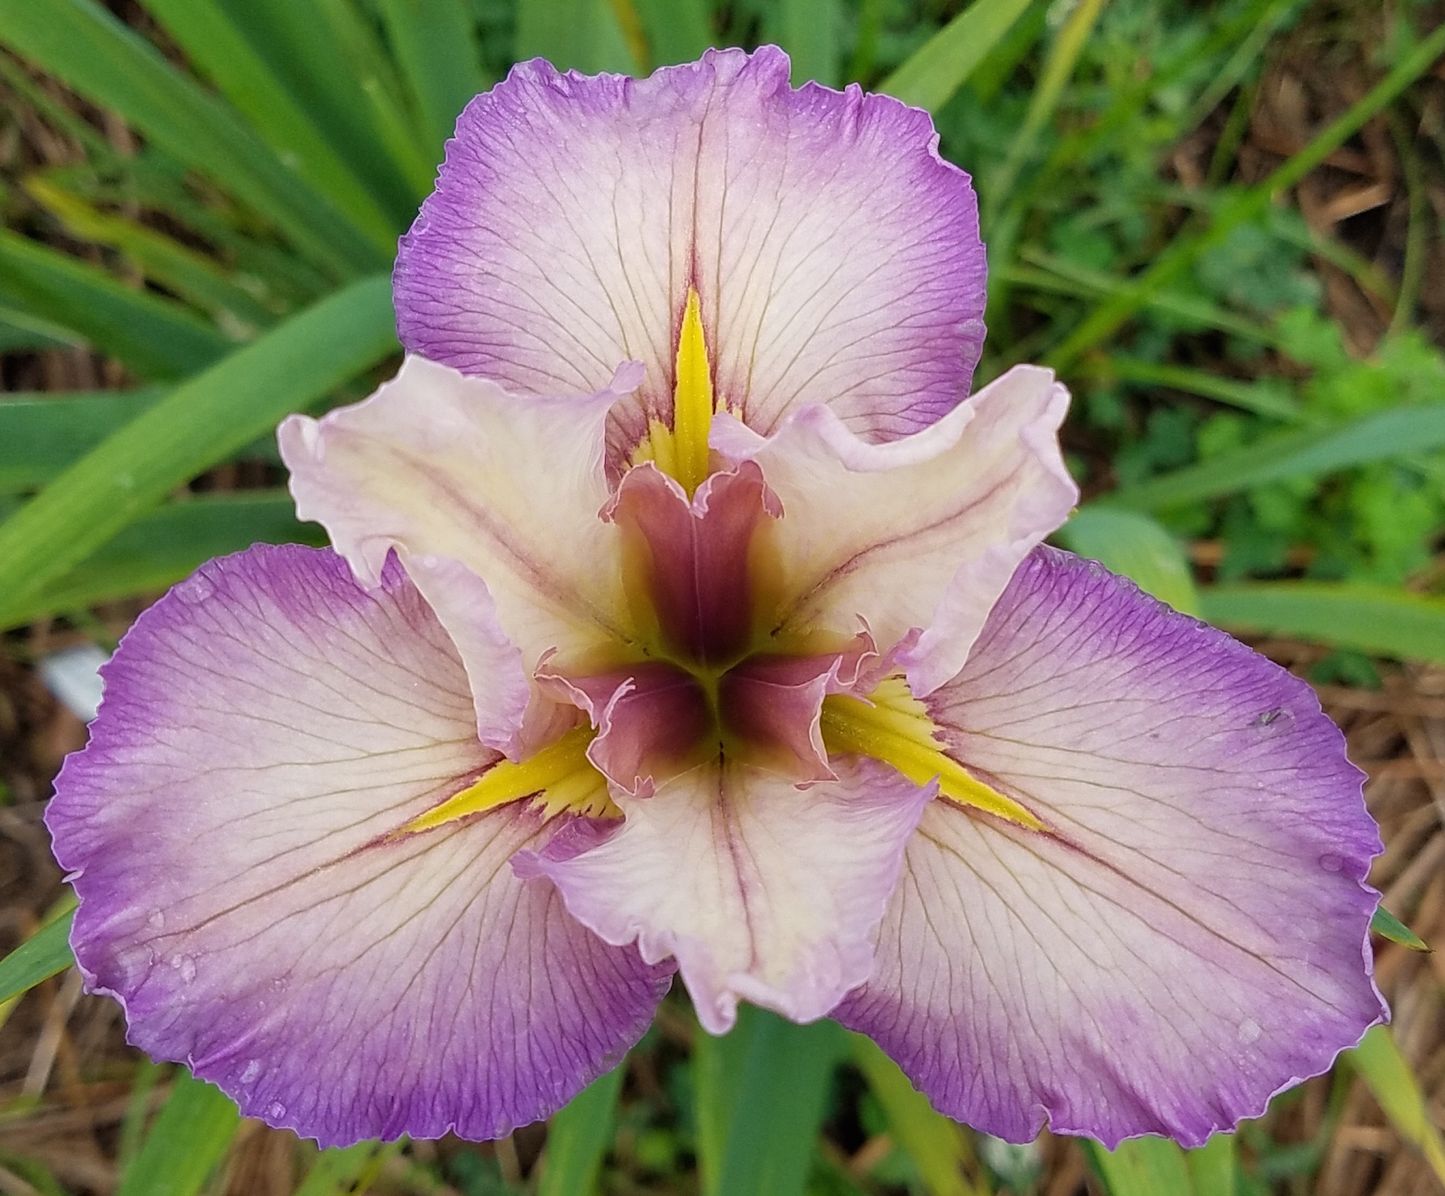 Image of a single bloom of Louisiana Iris Ephemeral Edge. Image credit: Brian Shamblin